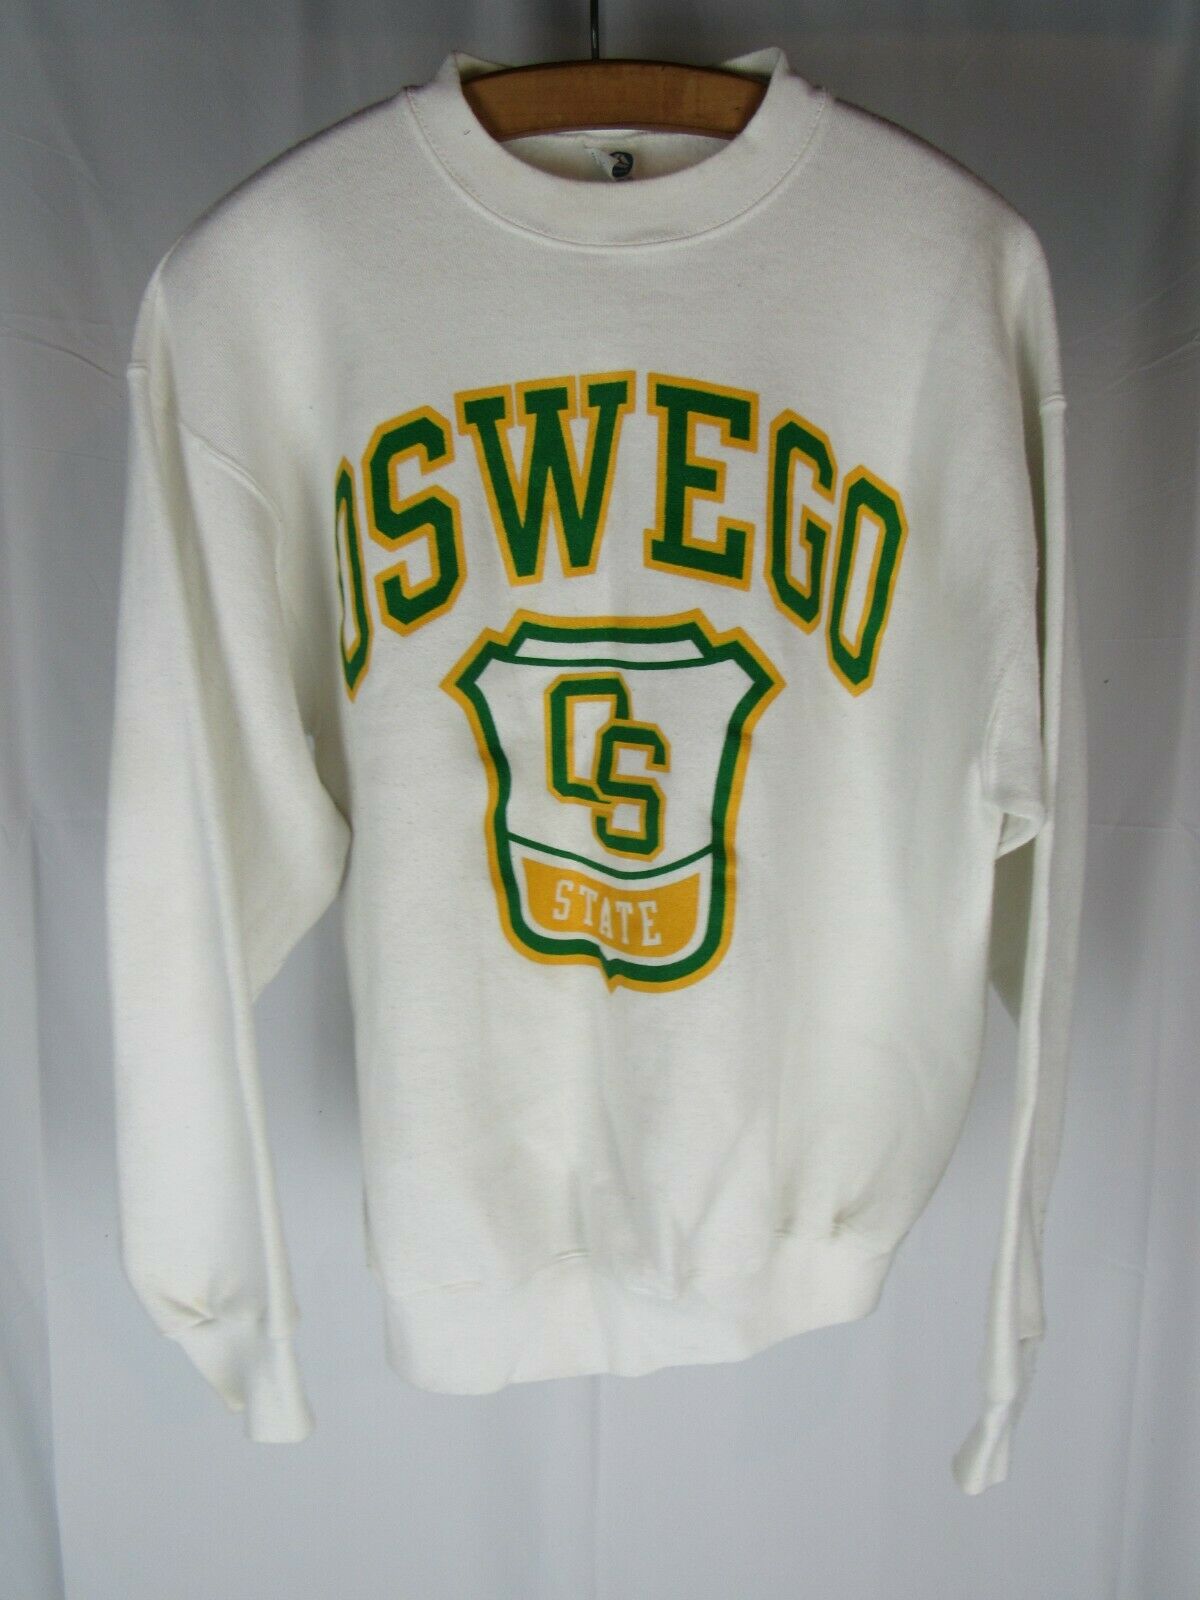 Vtg 70s 80s Artex Oswego State Sweatshirt University College Print Sz L Usa Made